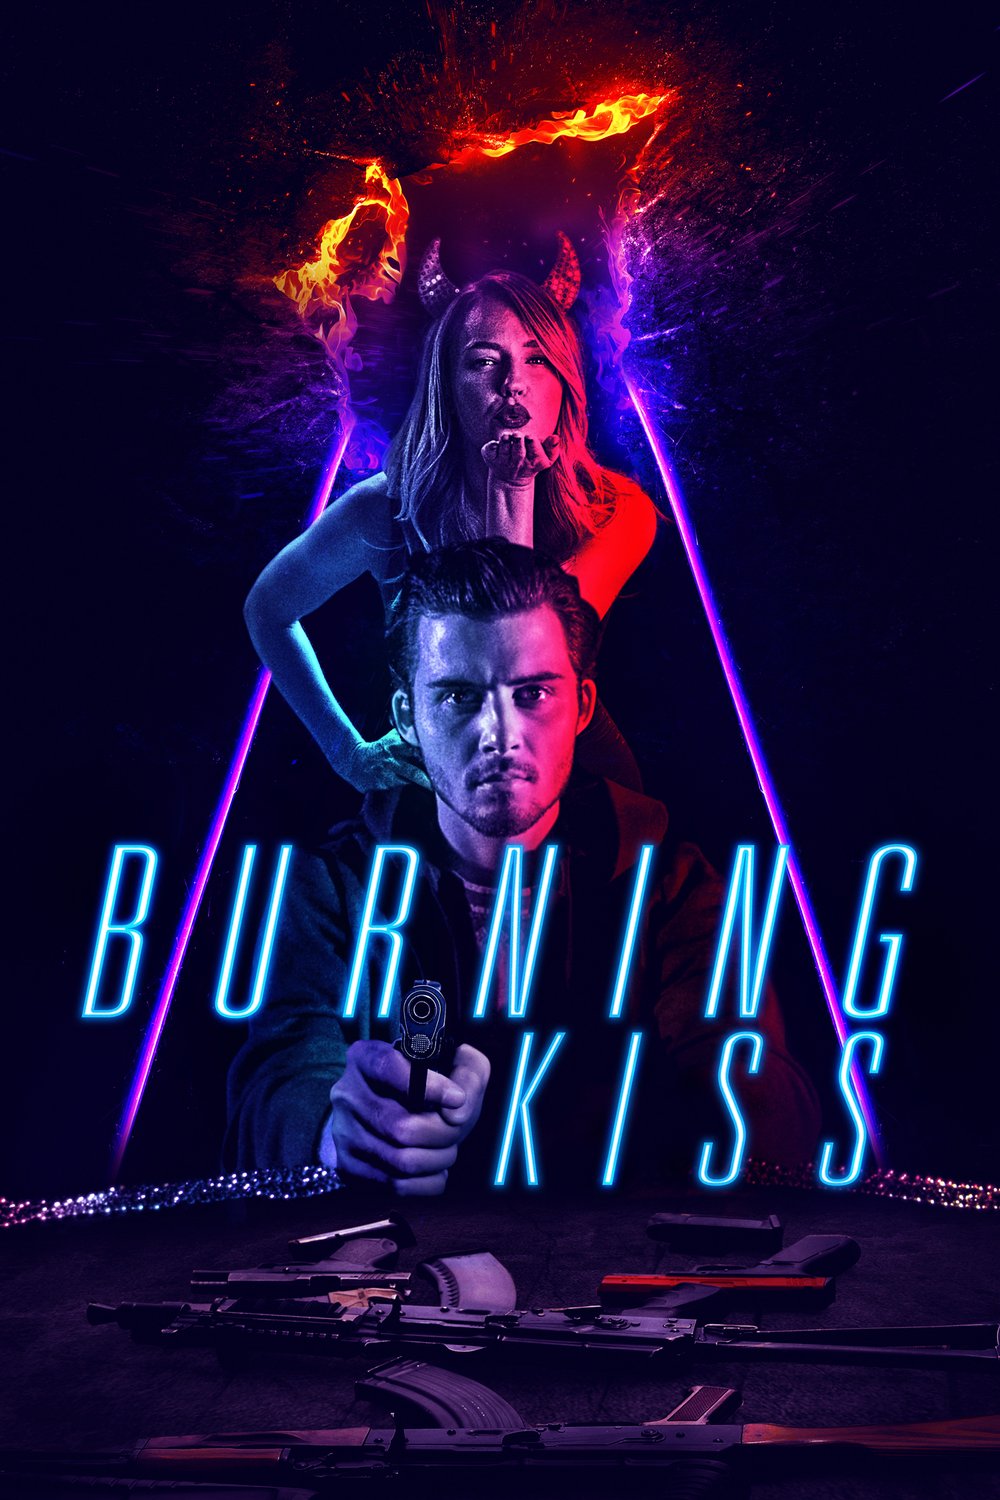 L'affiche du film Burning Kiss